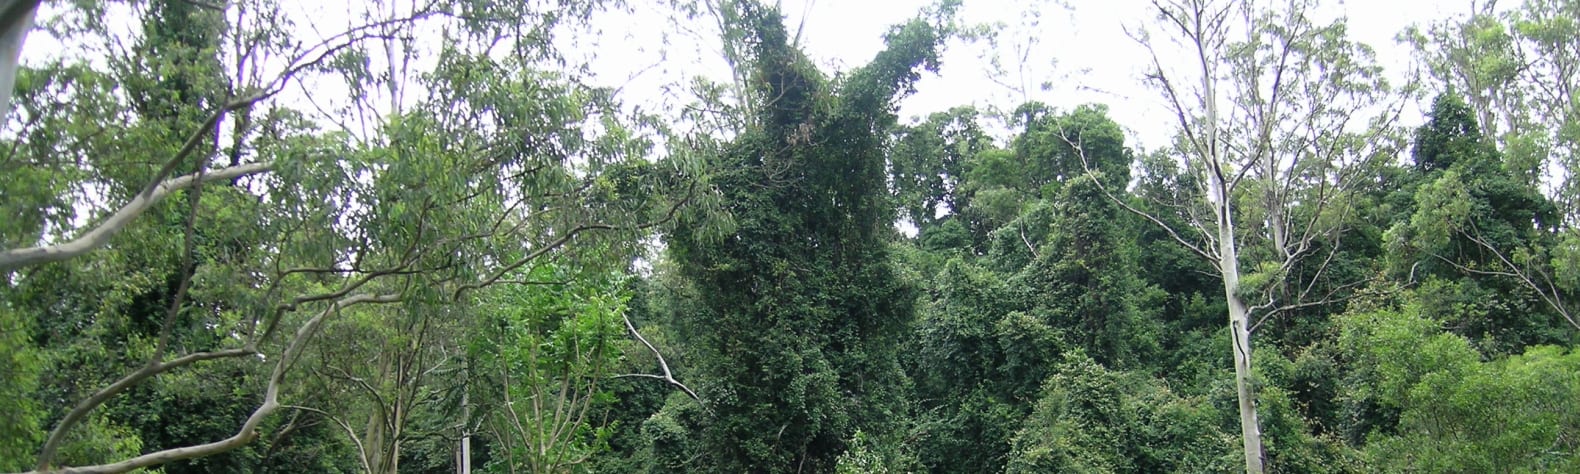 Cottan-Bimbang State Conservation Area